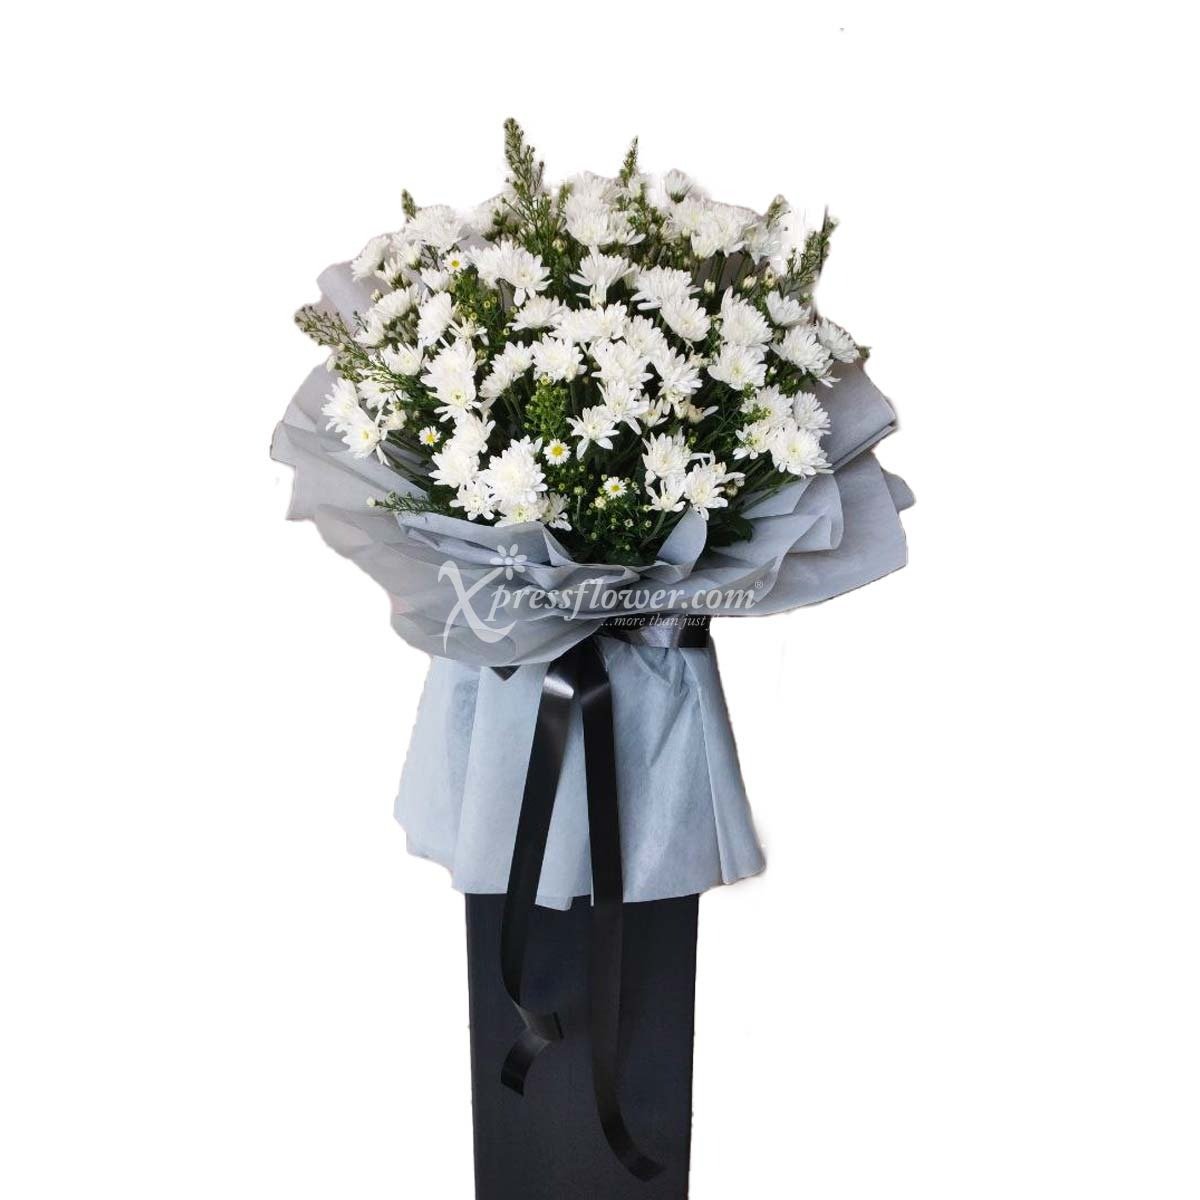 WSC2206 Sentimental Solace Funeral Condolence Flower Wreath B